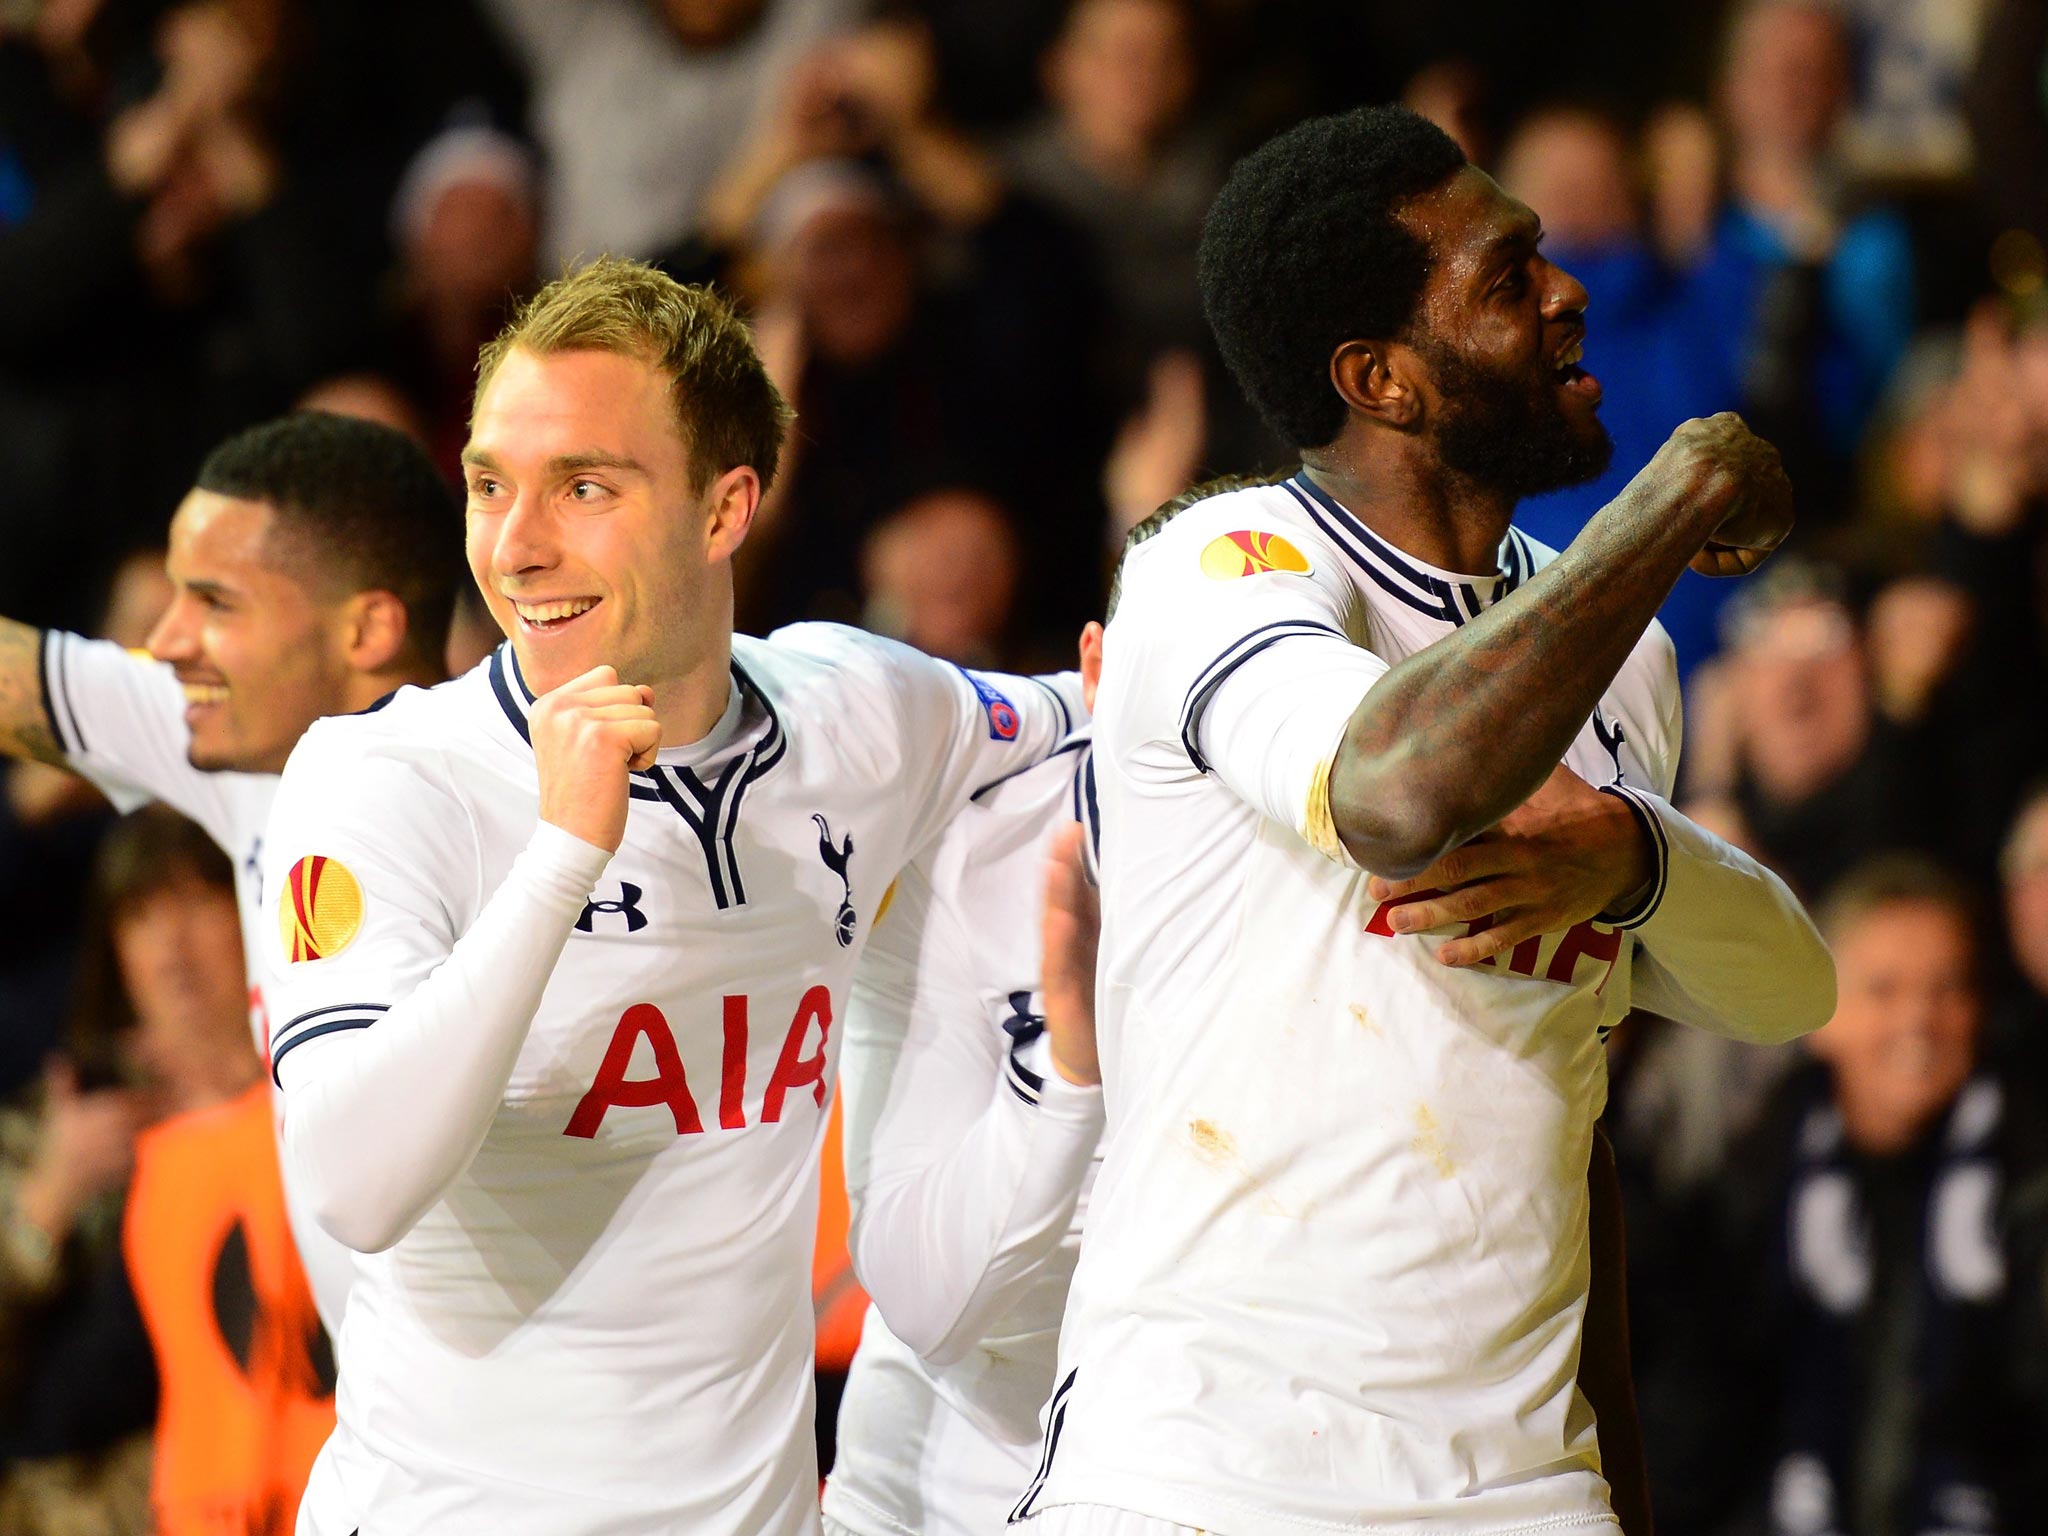 Emmanuel Adebayor of Tottenham Hotspur celebrates with team mate Christian Eriksen after scoring a goal